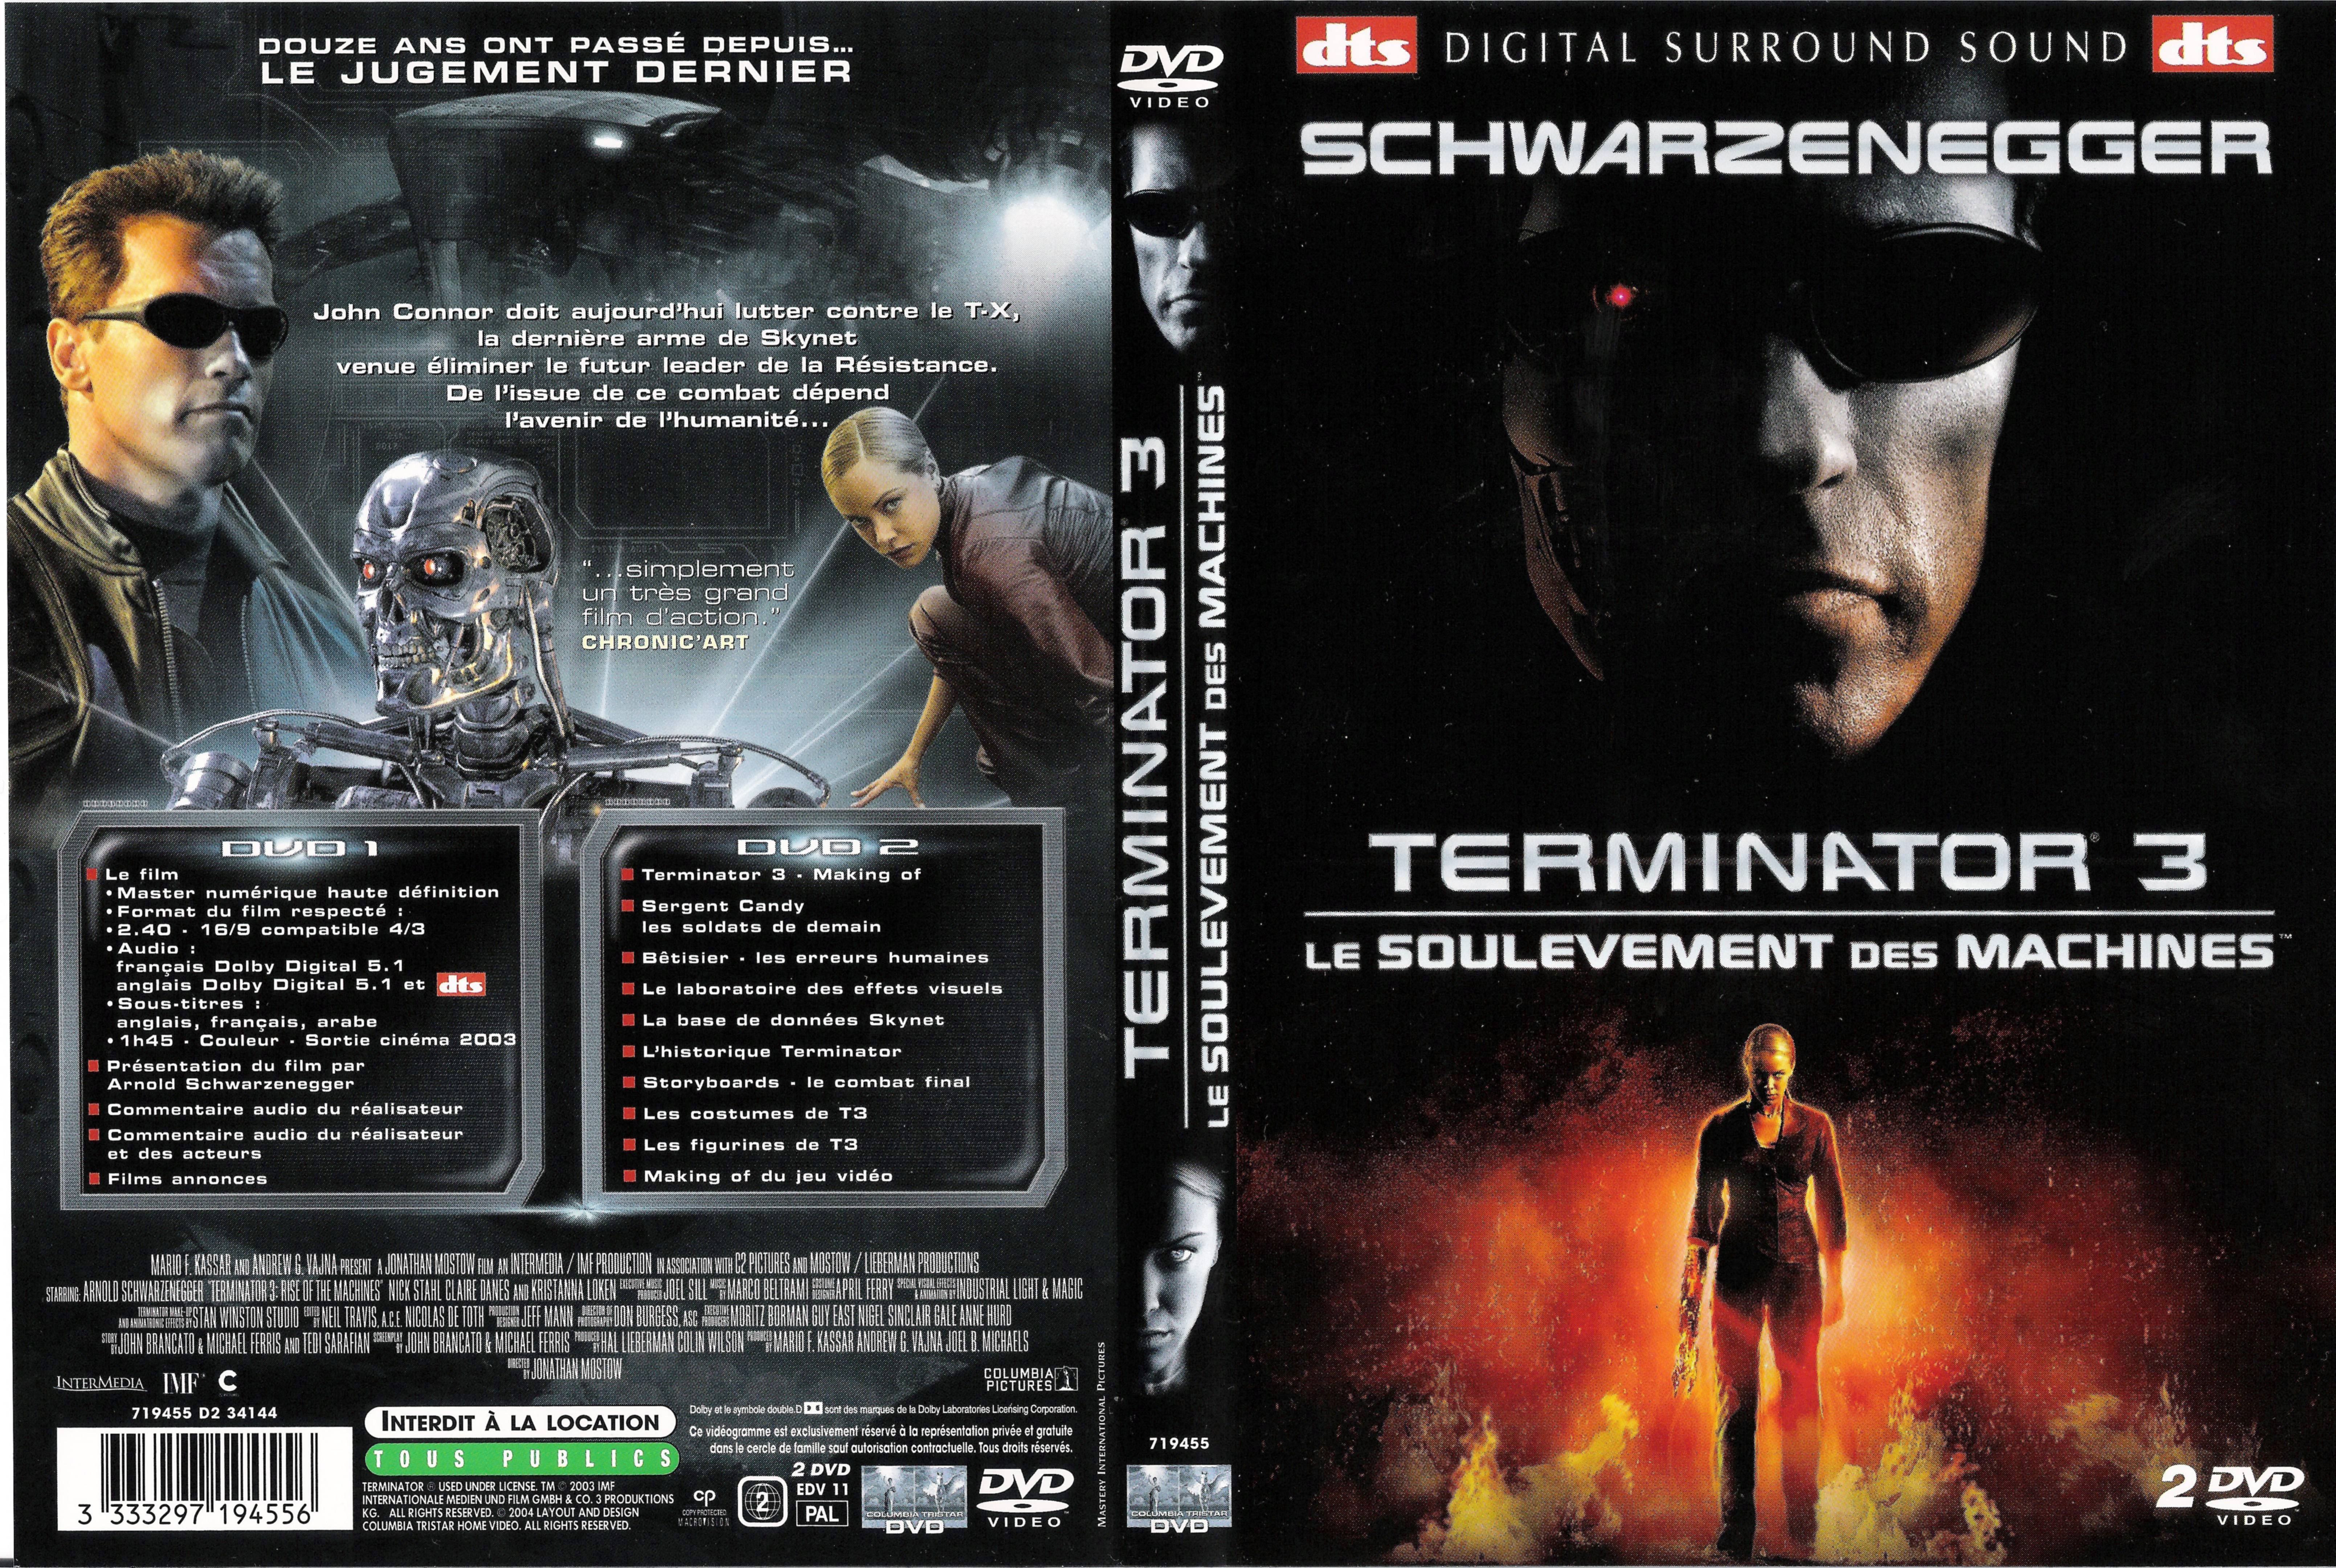 Jaquette DVD Terminator 3 v2